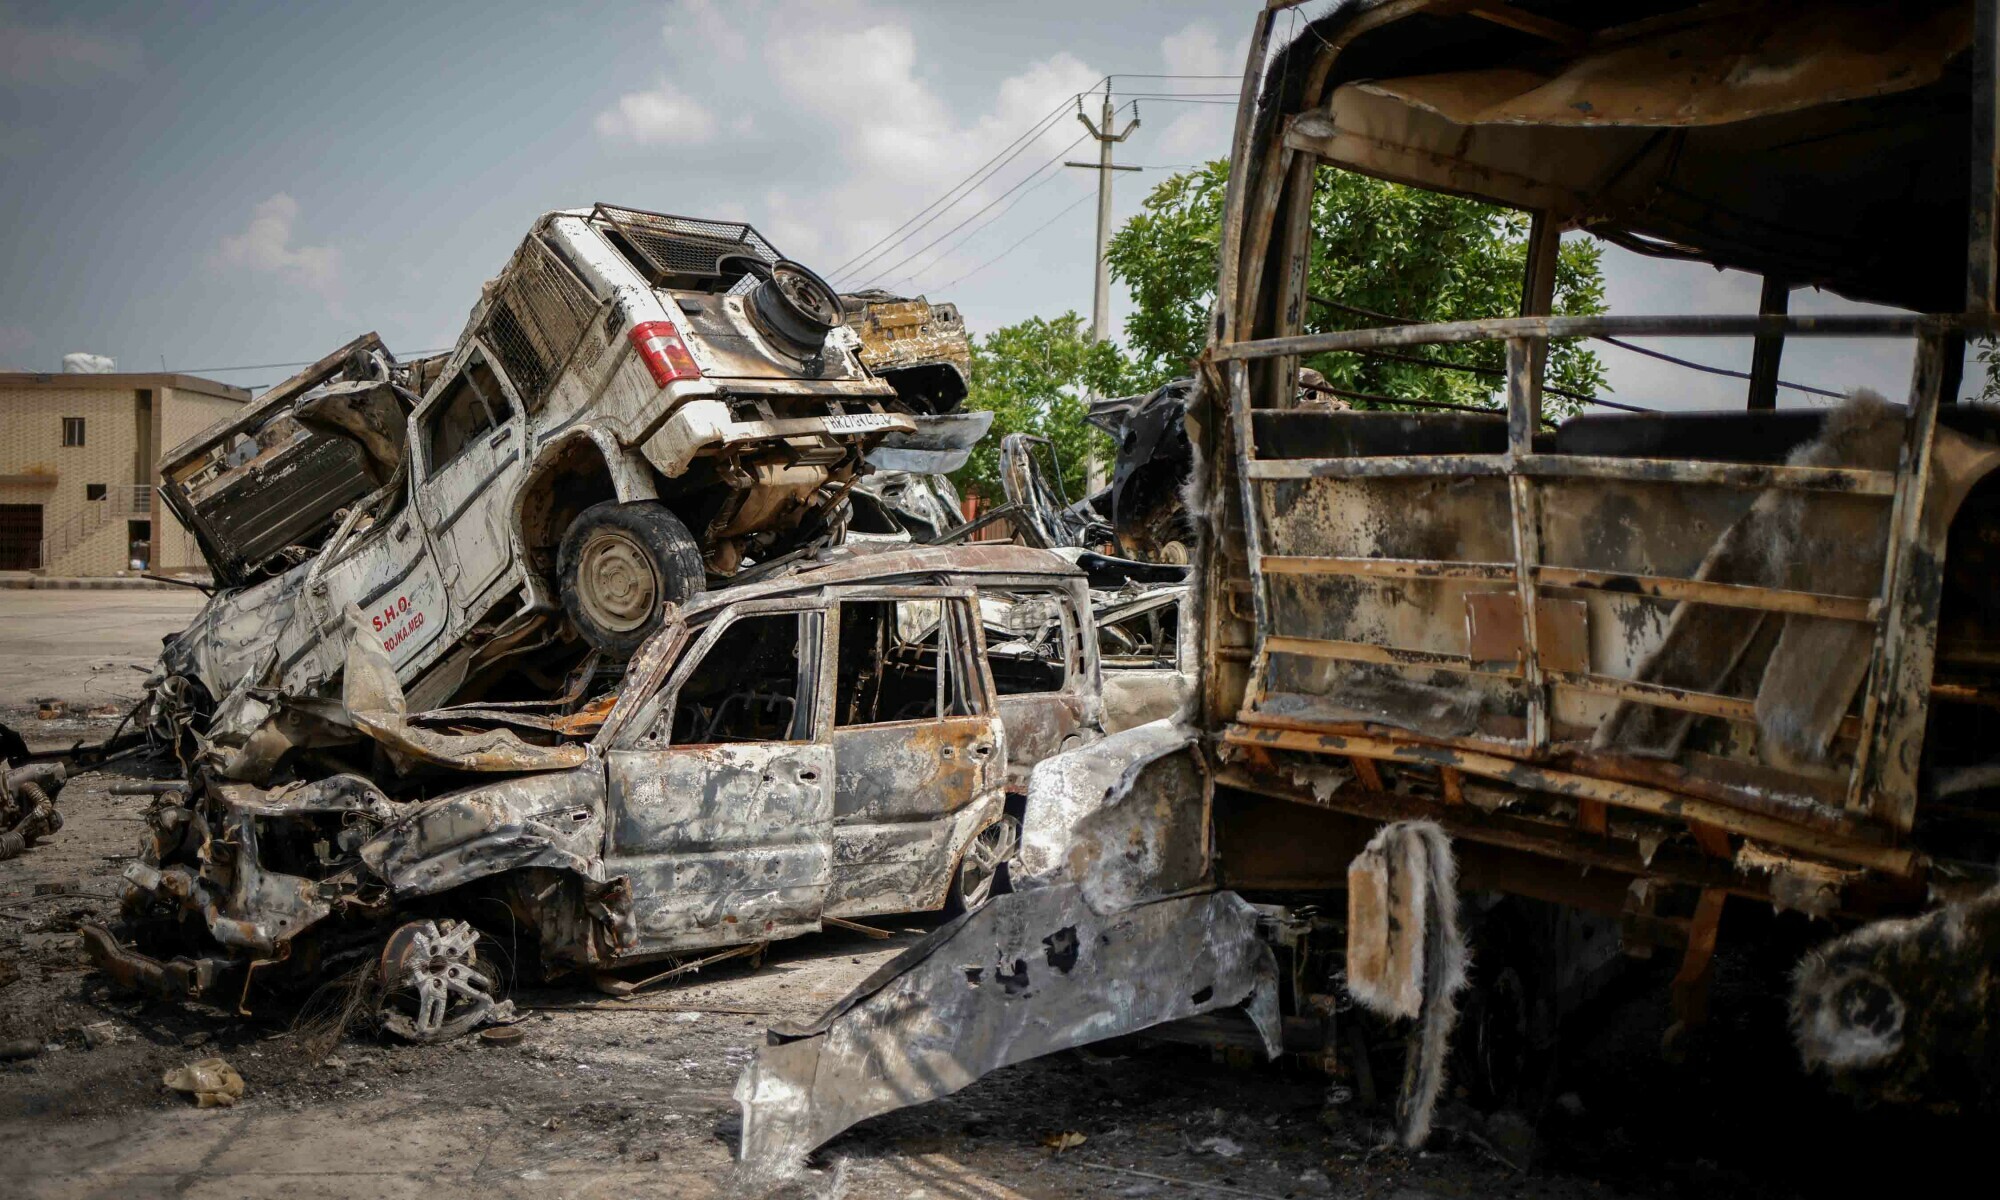 Death toll in Hindu-Muslim riots near India’s capital rises to 6 .